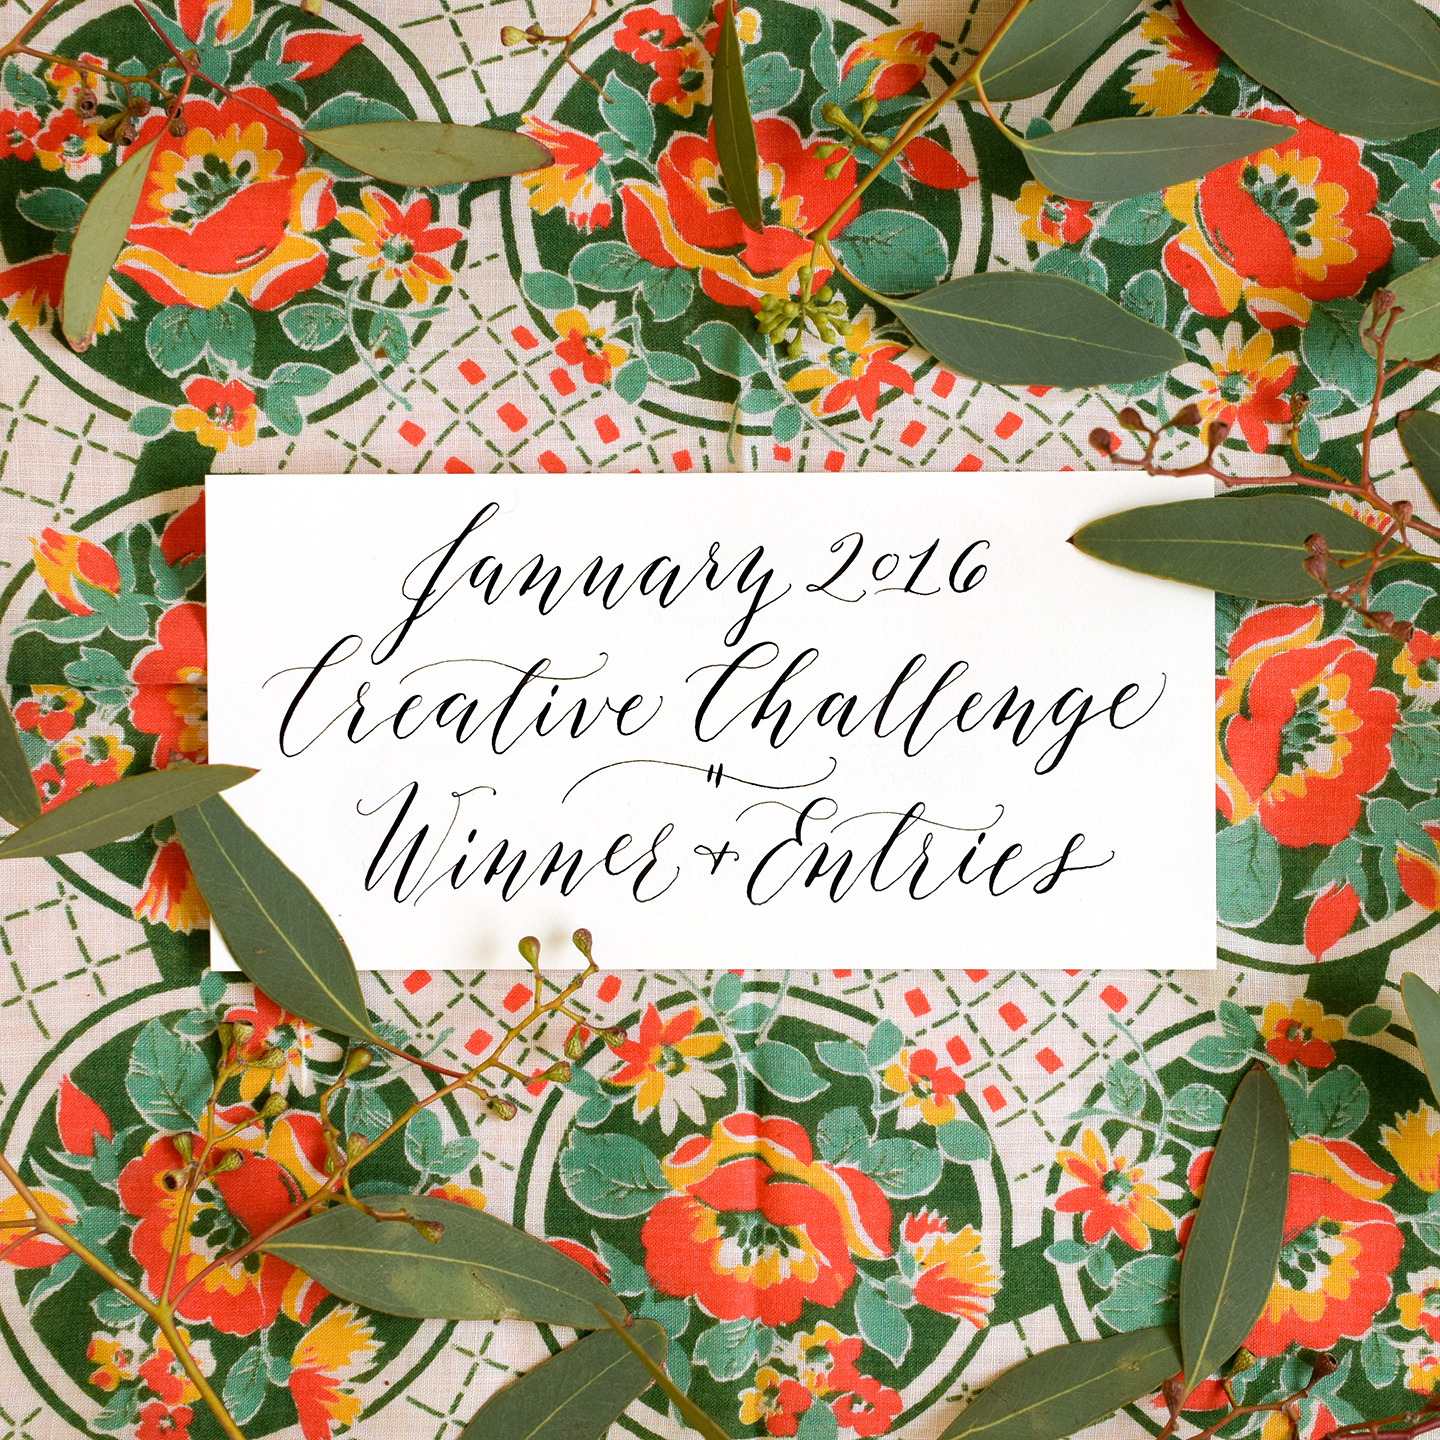 January 2016 Creative Challenge Winner + Entries